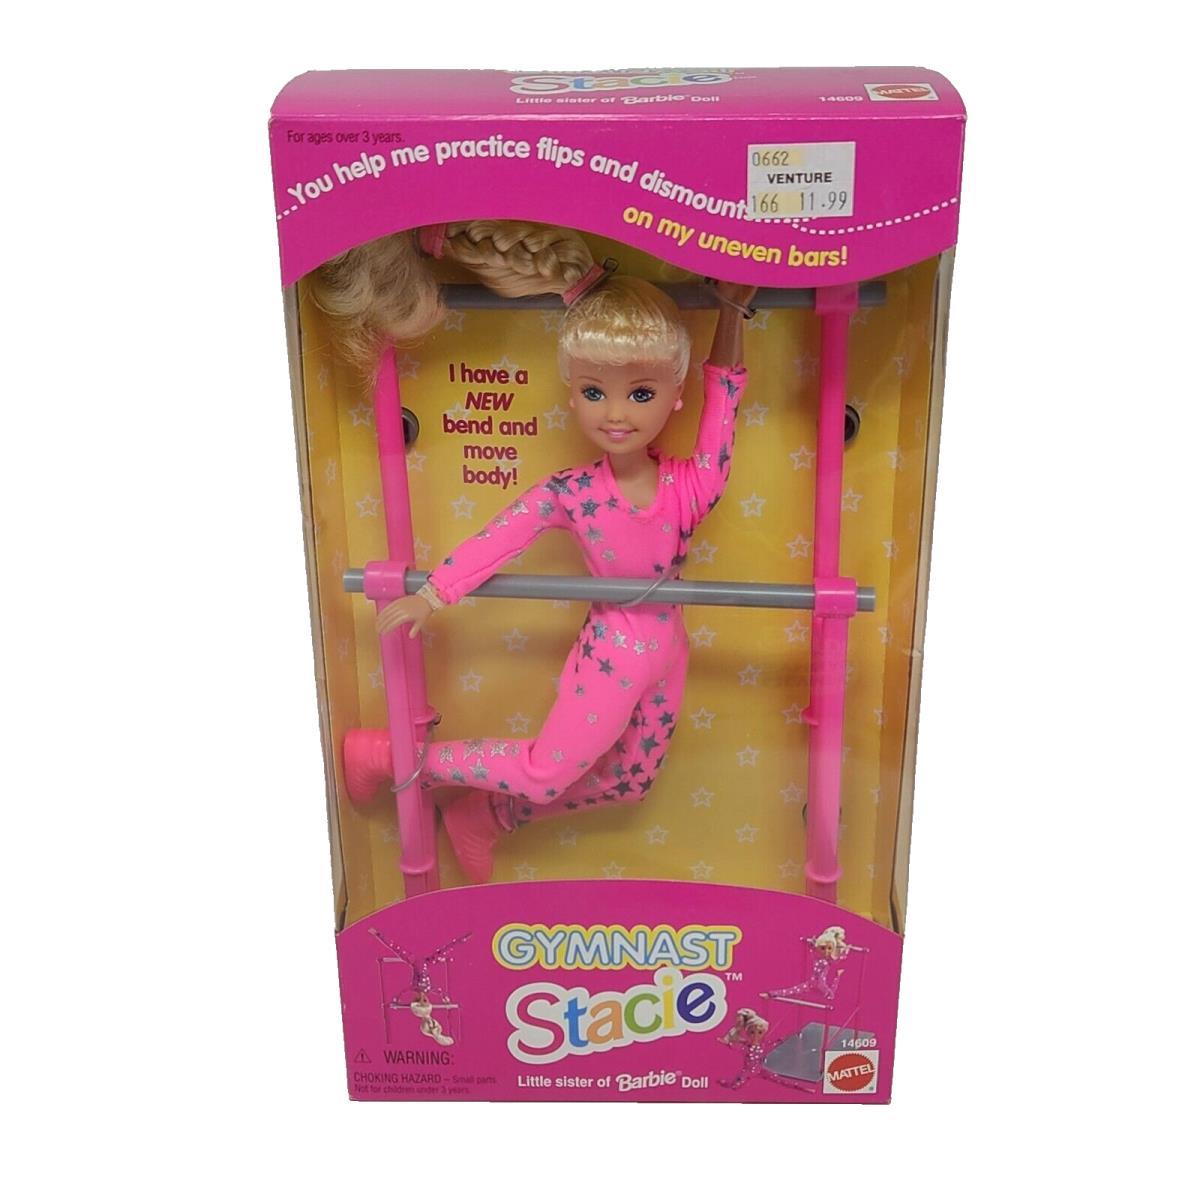 Vintage 1995 Gymnyst Stacie Barbie Sister Doll 14609 Uneven Bars